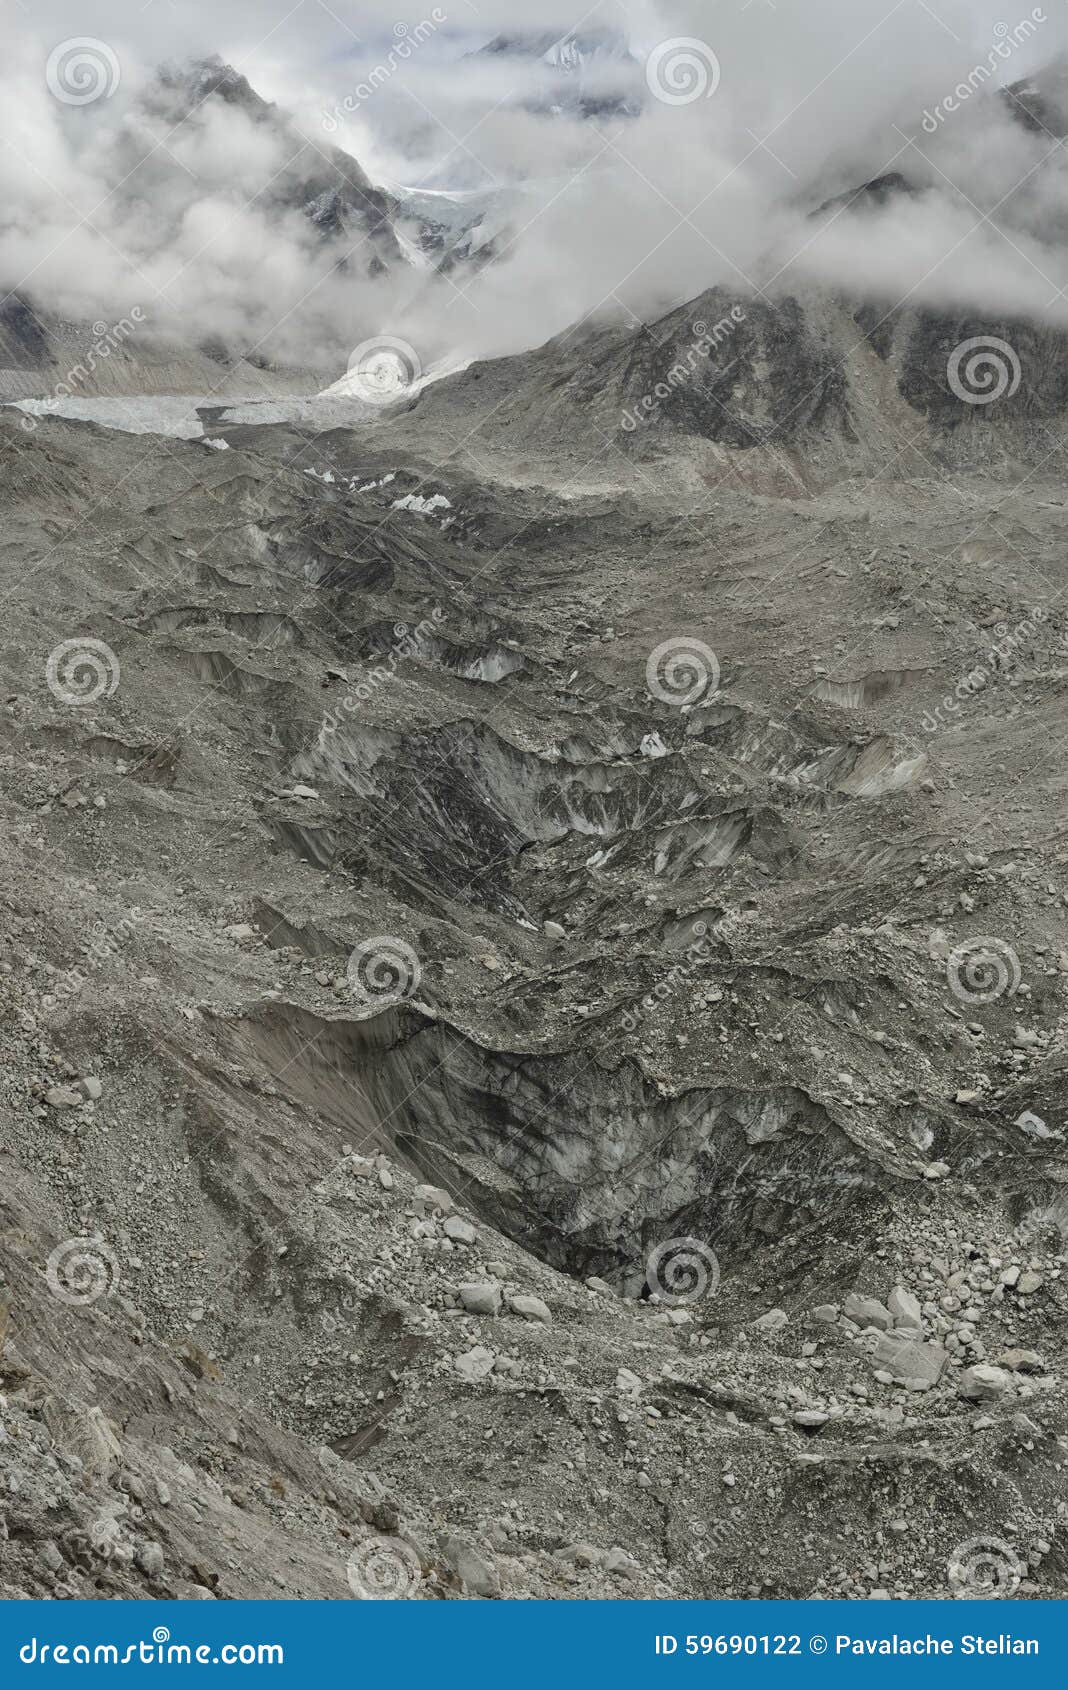 khumbu glacier in himalaya. nepal